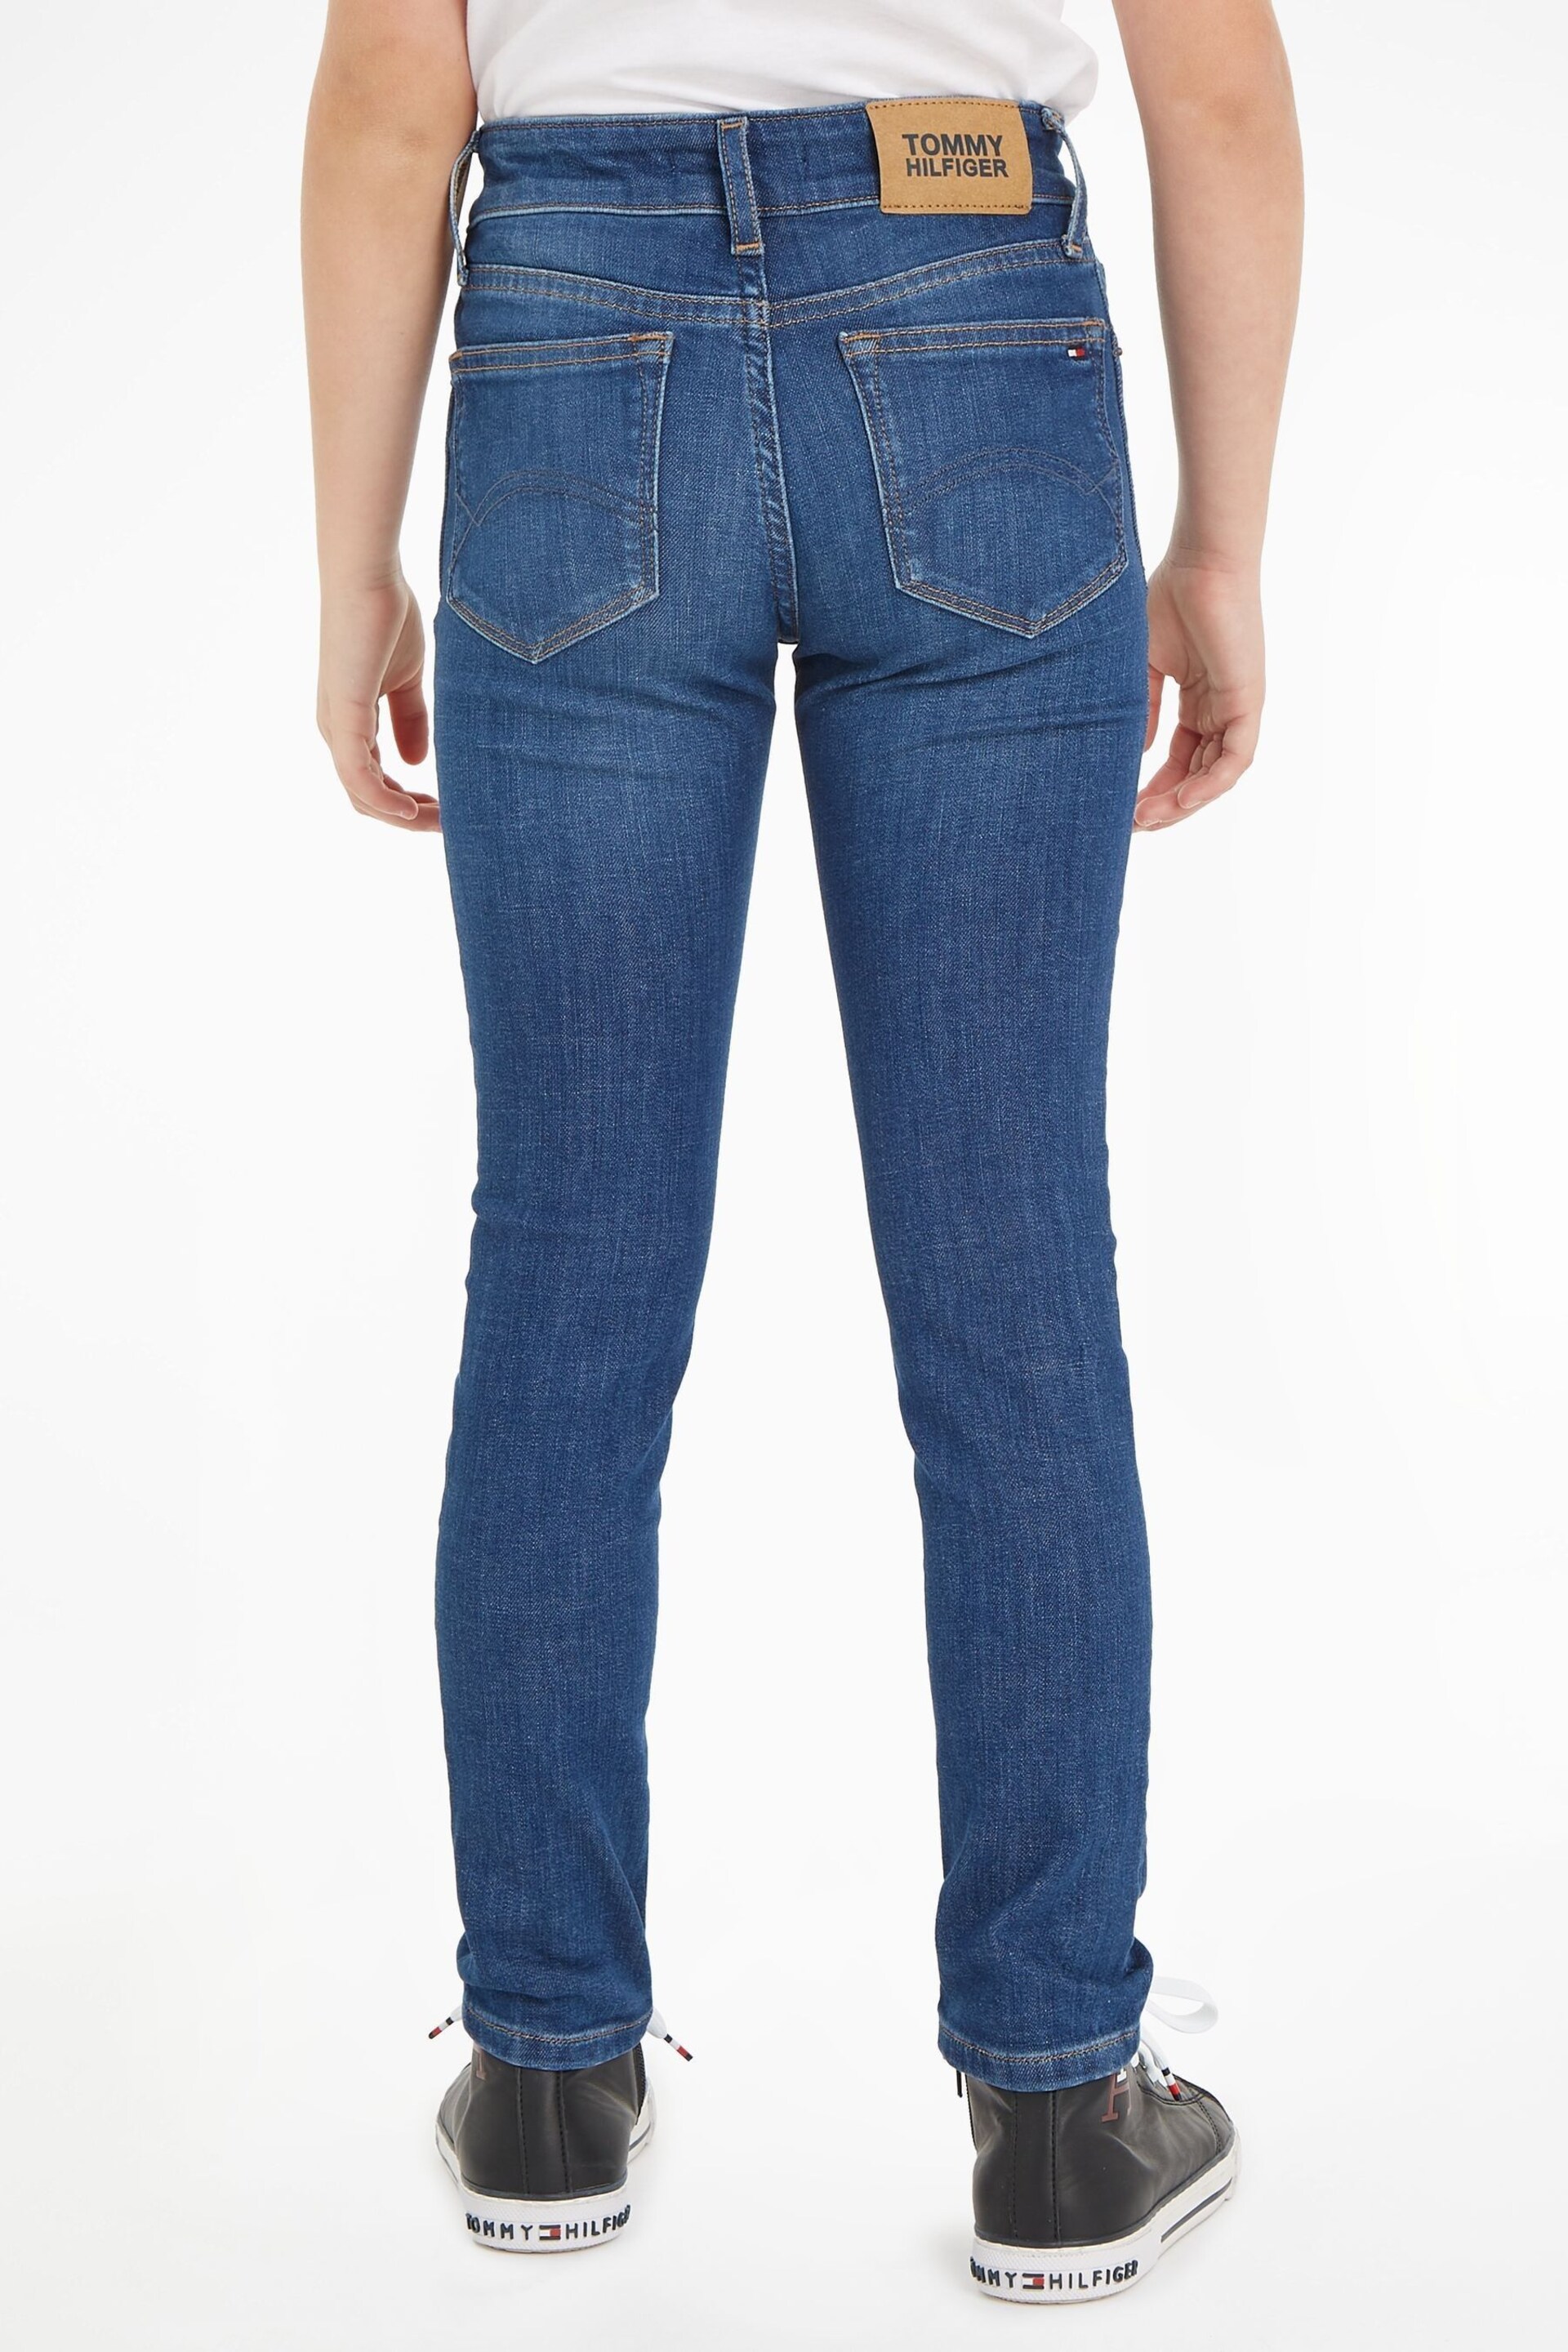 Tommy Hilfiger Blue Nora Dark Wash Jeans - Image 2 of 6